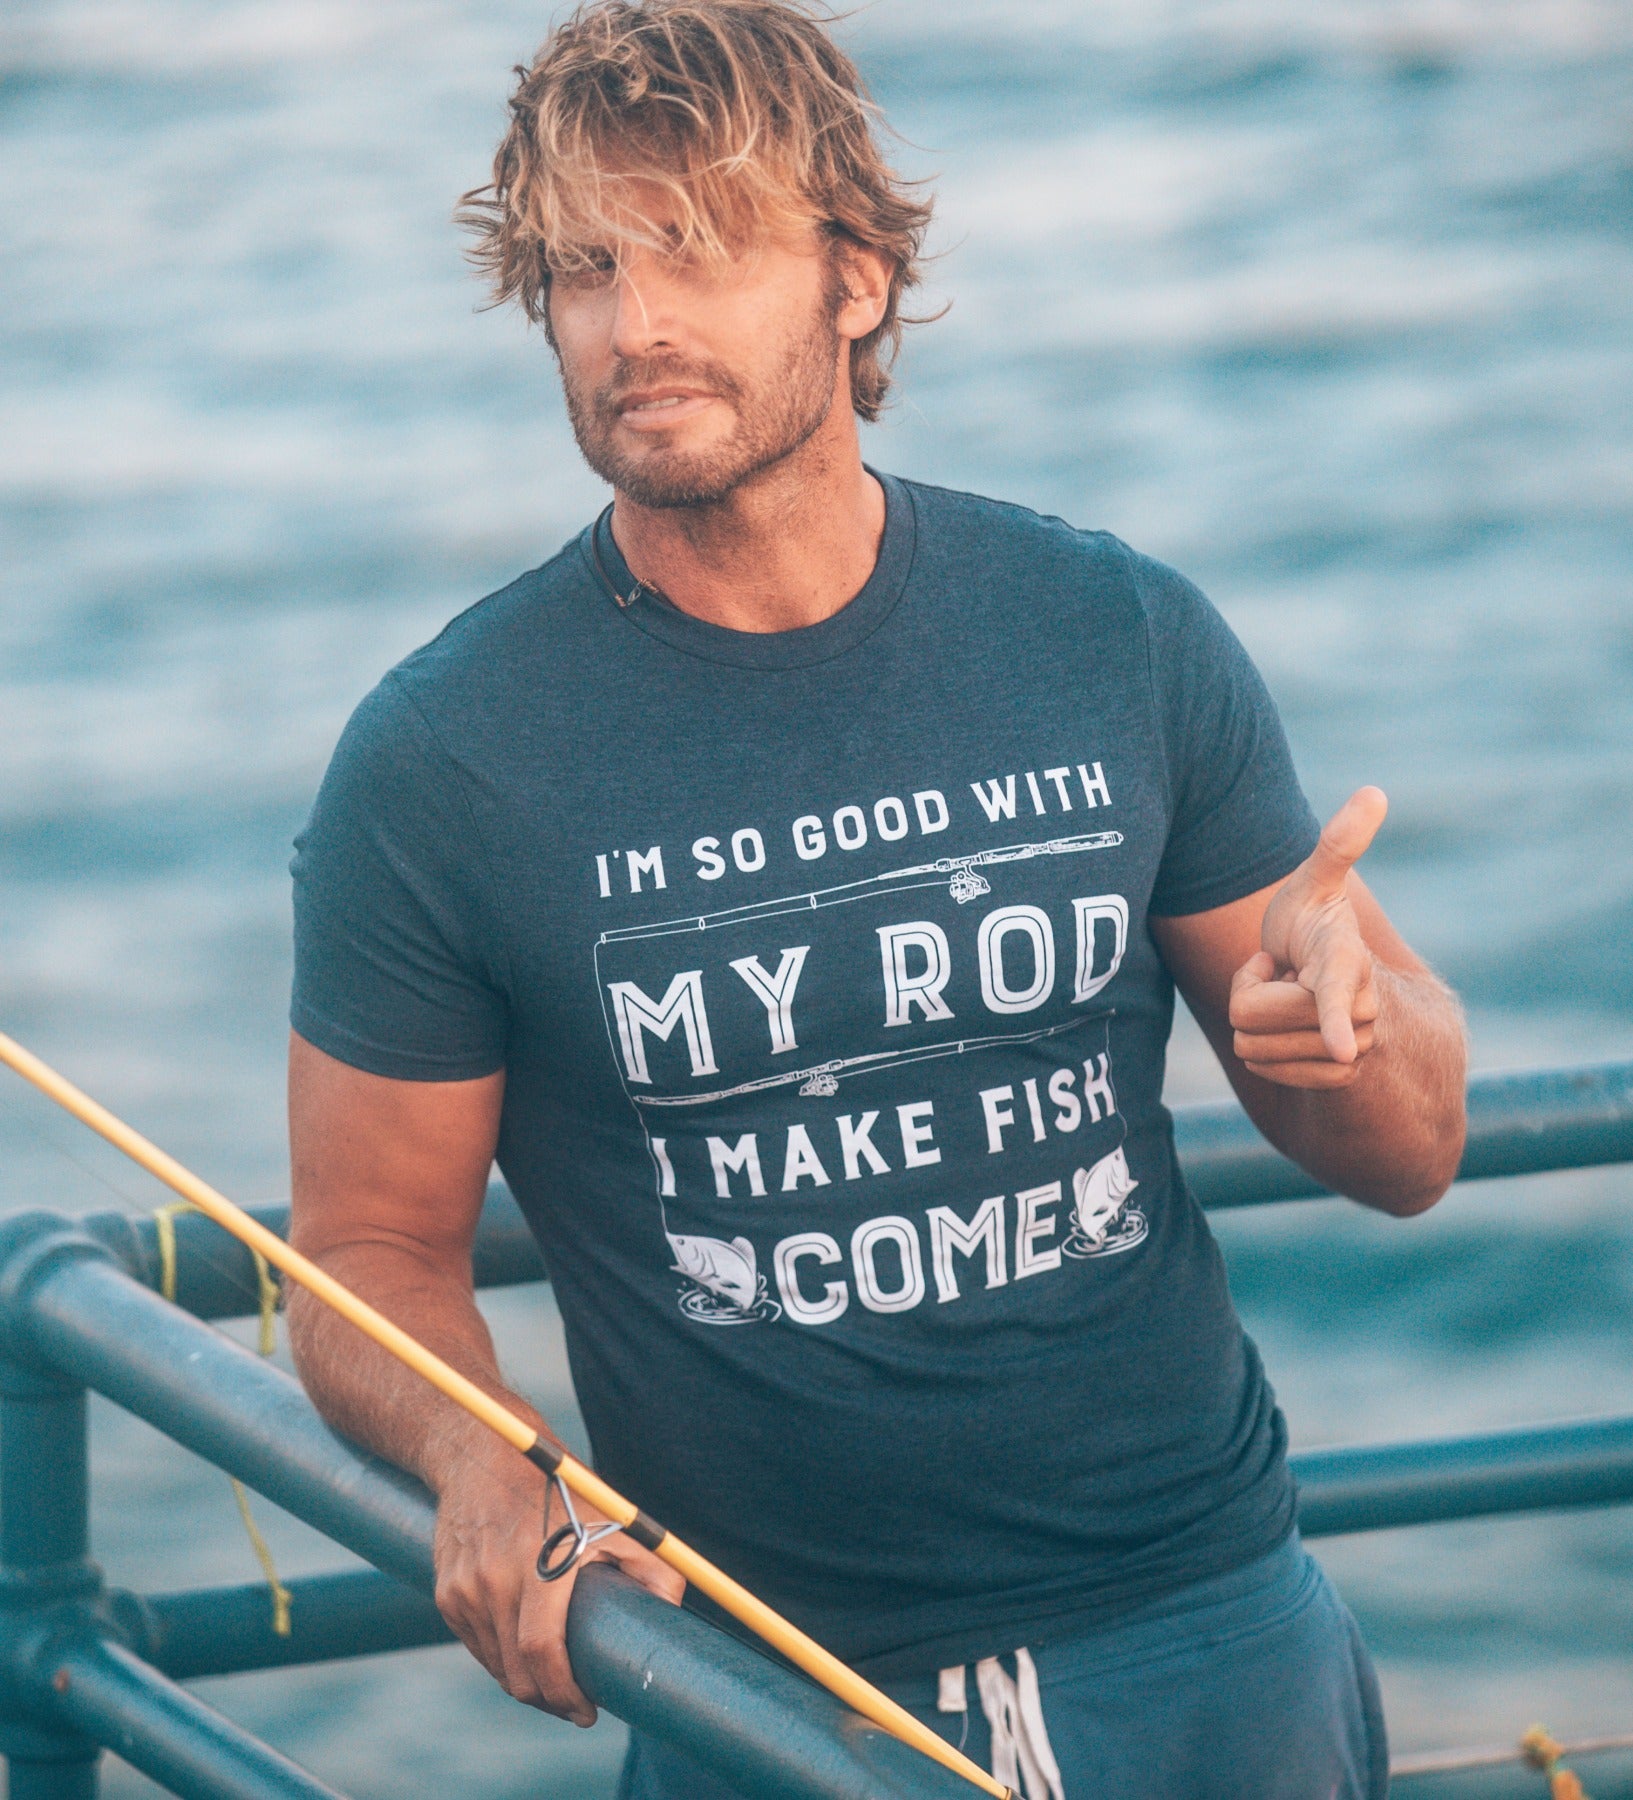 Familyloveshop LLC Fishing Tshirt, Men Fishing Shirt, Funny Men Shirts, WTF  Where Is The Fish Shirt, Graphic Tees, T-shirt for Men, Gift For Him